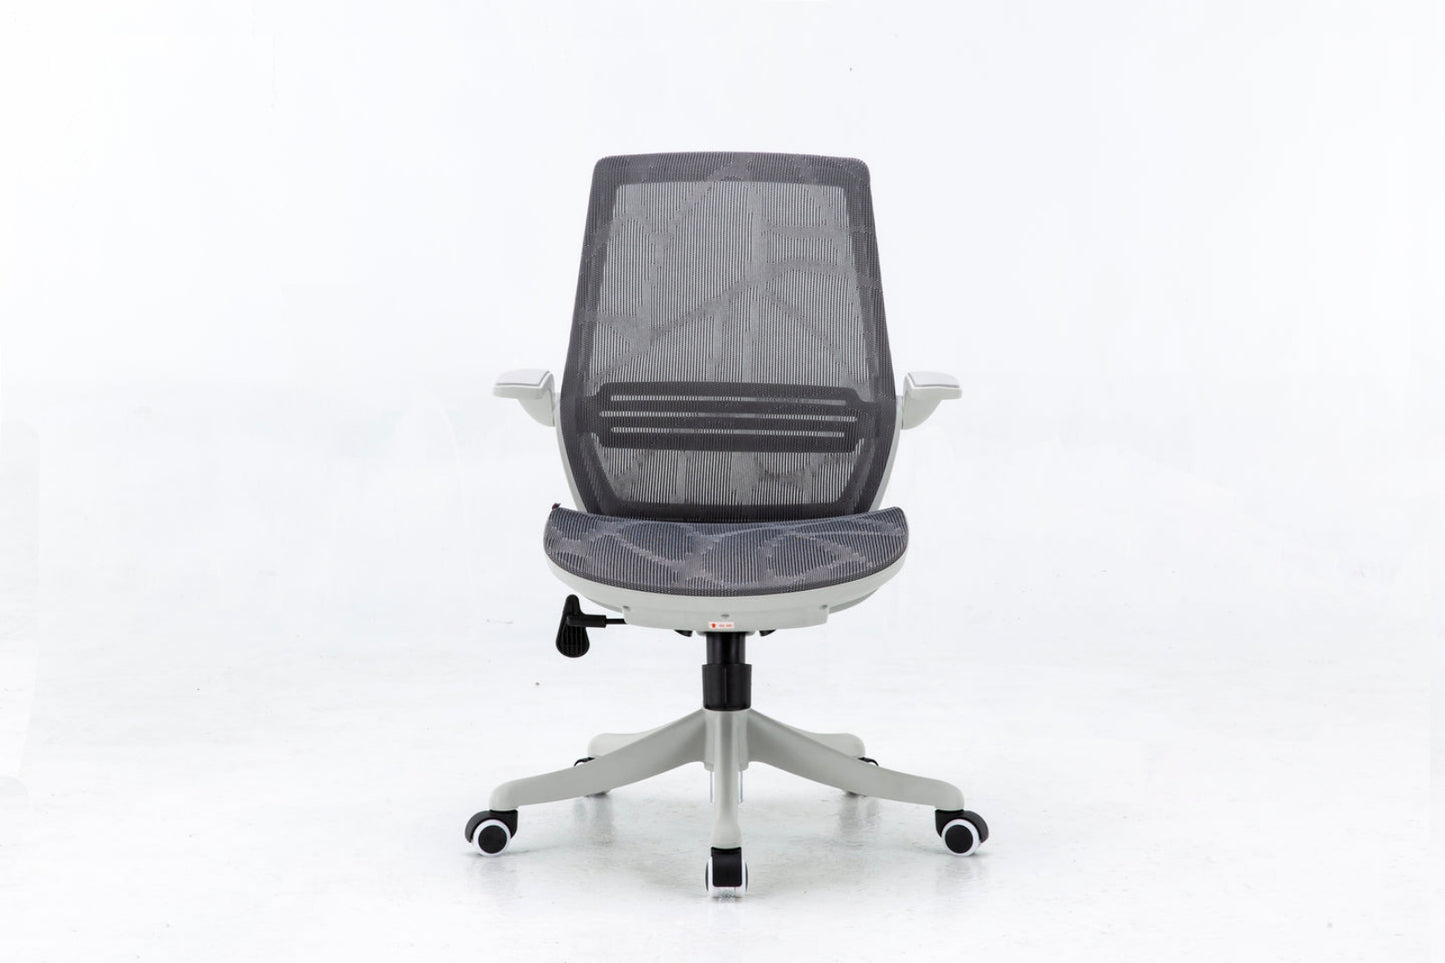 Sihoo M59B Full-mesh Ergonomic Chair